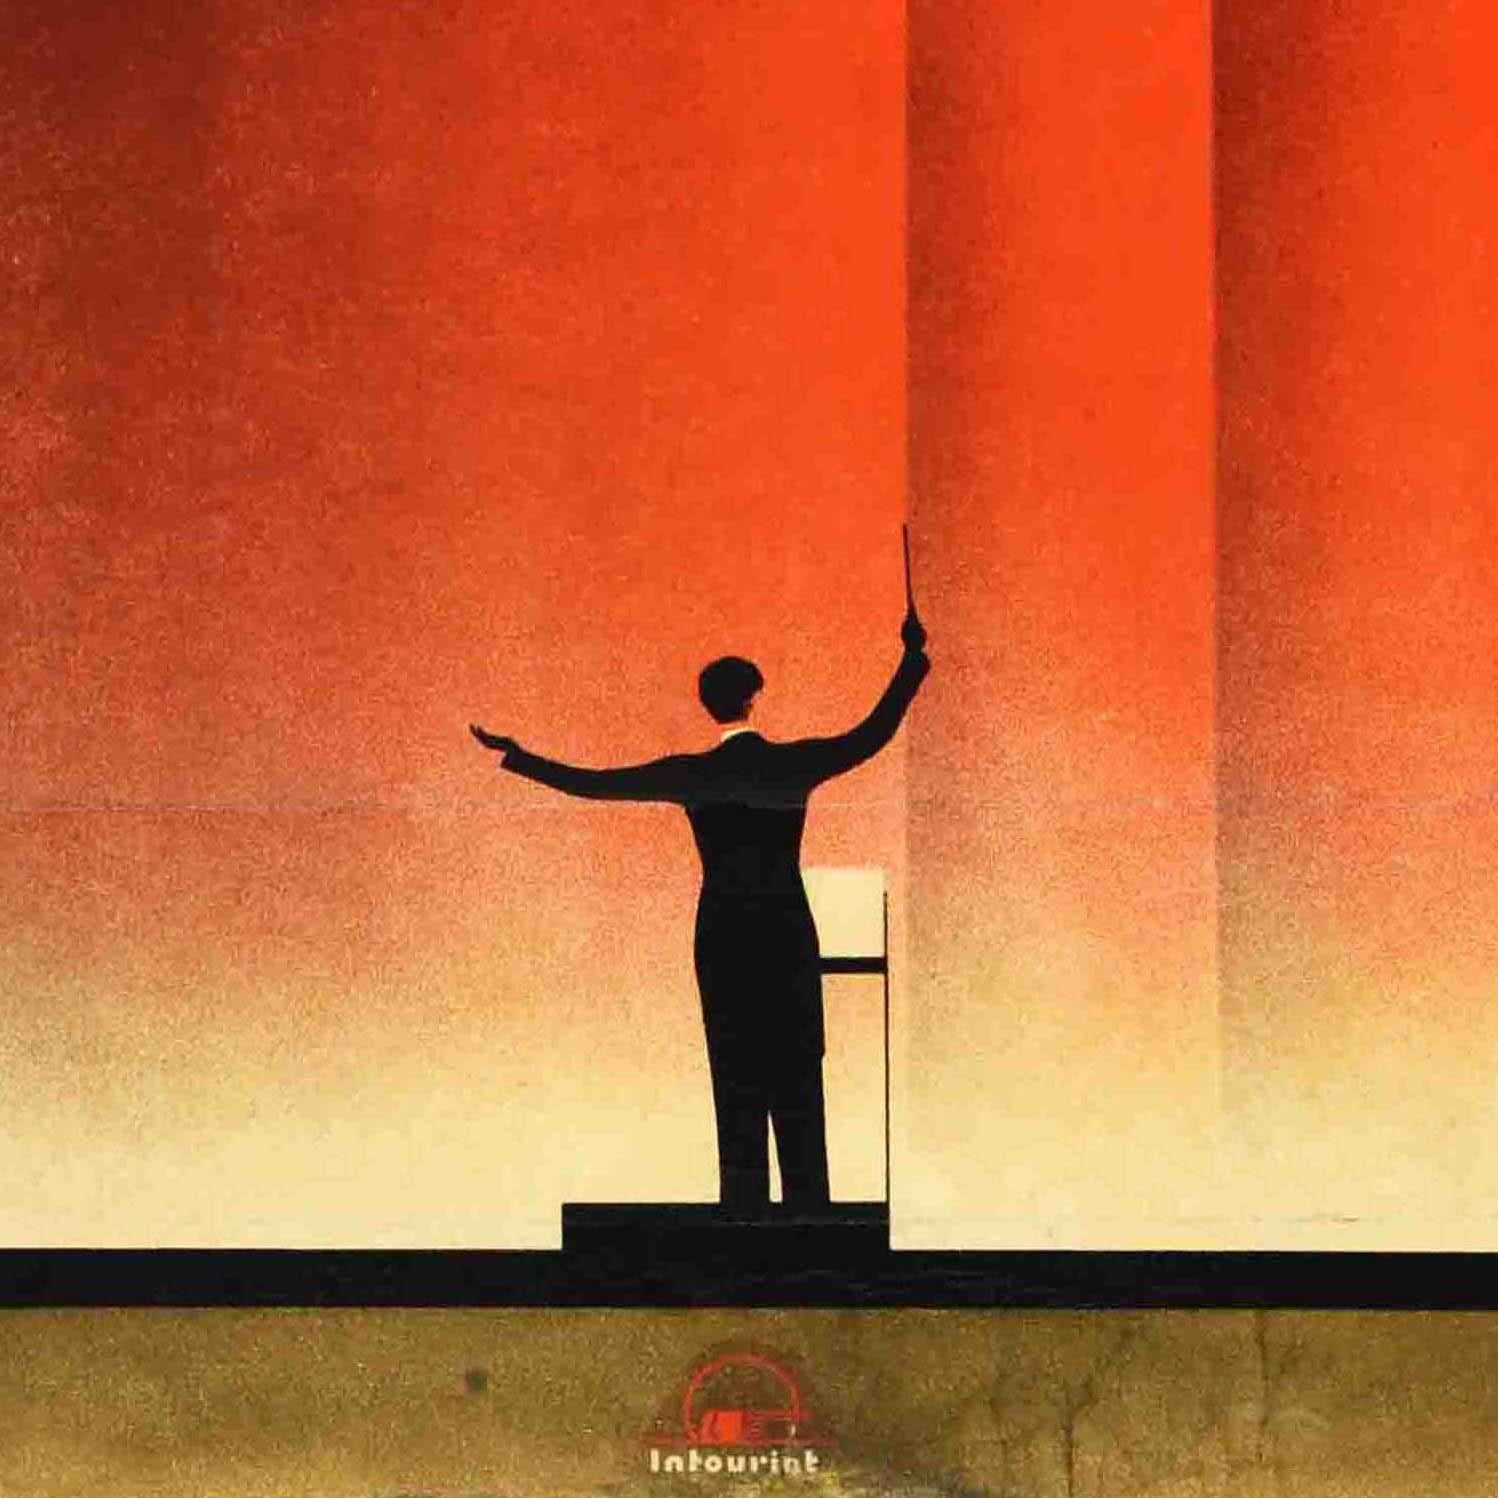 Original Vintage Soviet Advertising Poster Moscow Theatre Festival Intourist Art - Print by Nikolai Zhukov